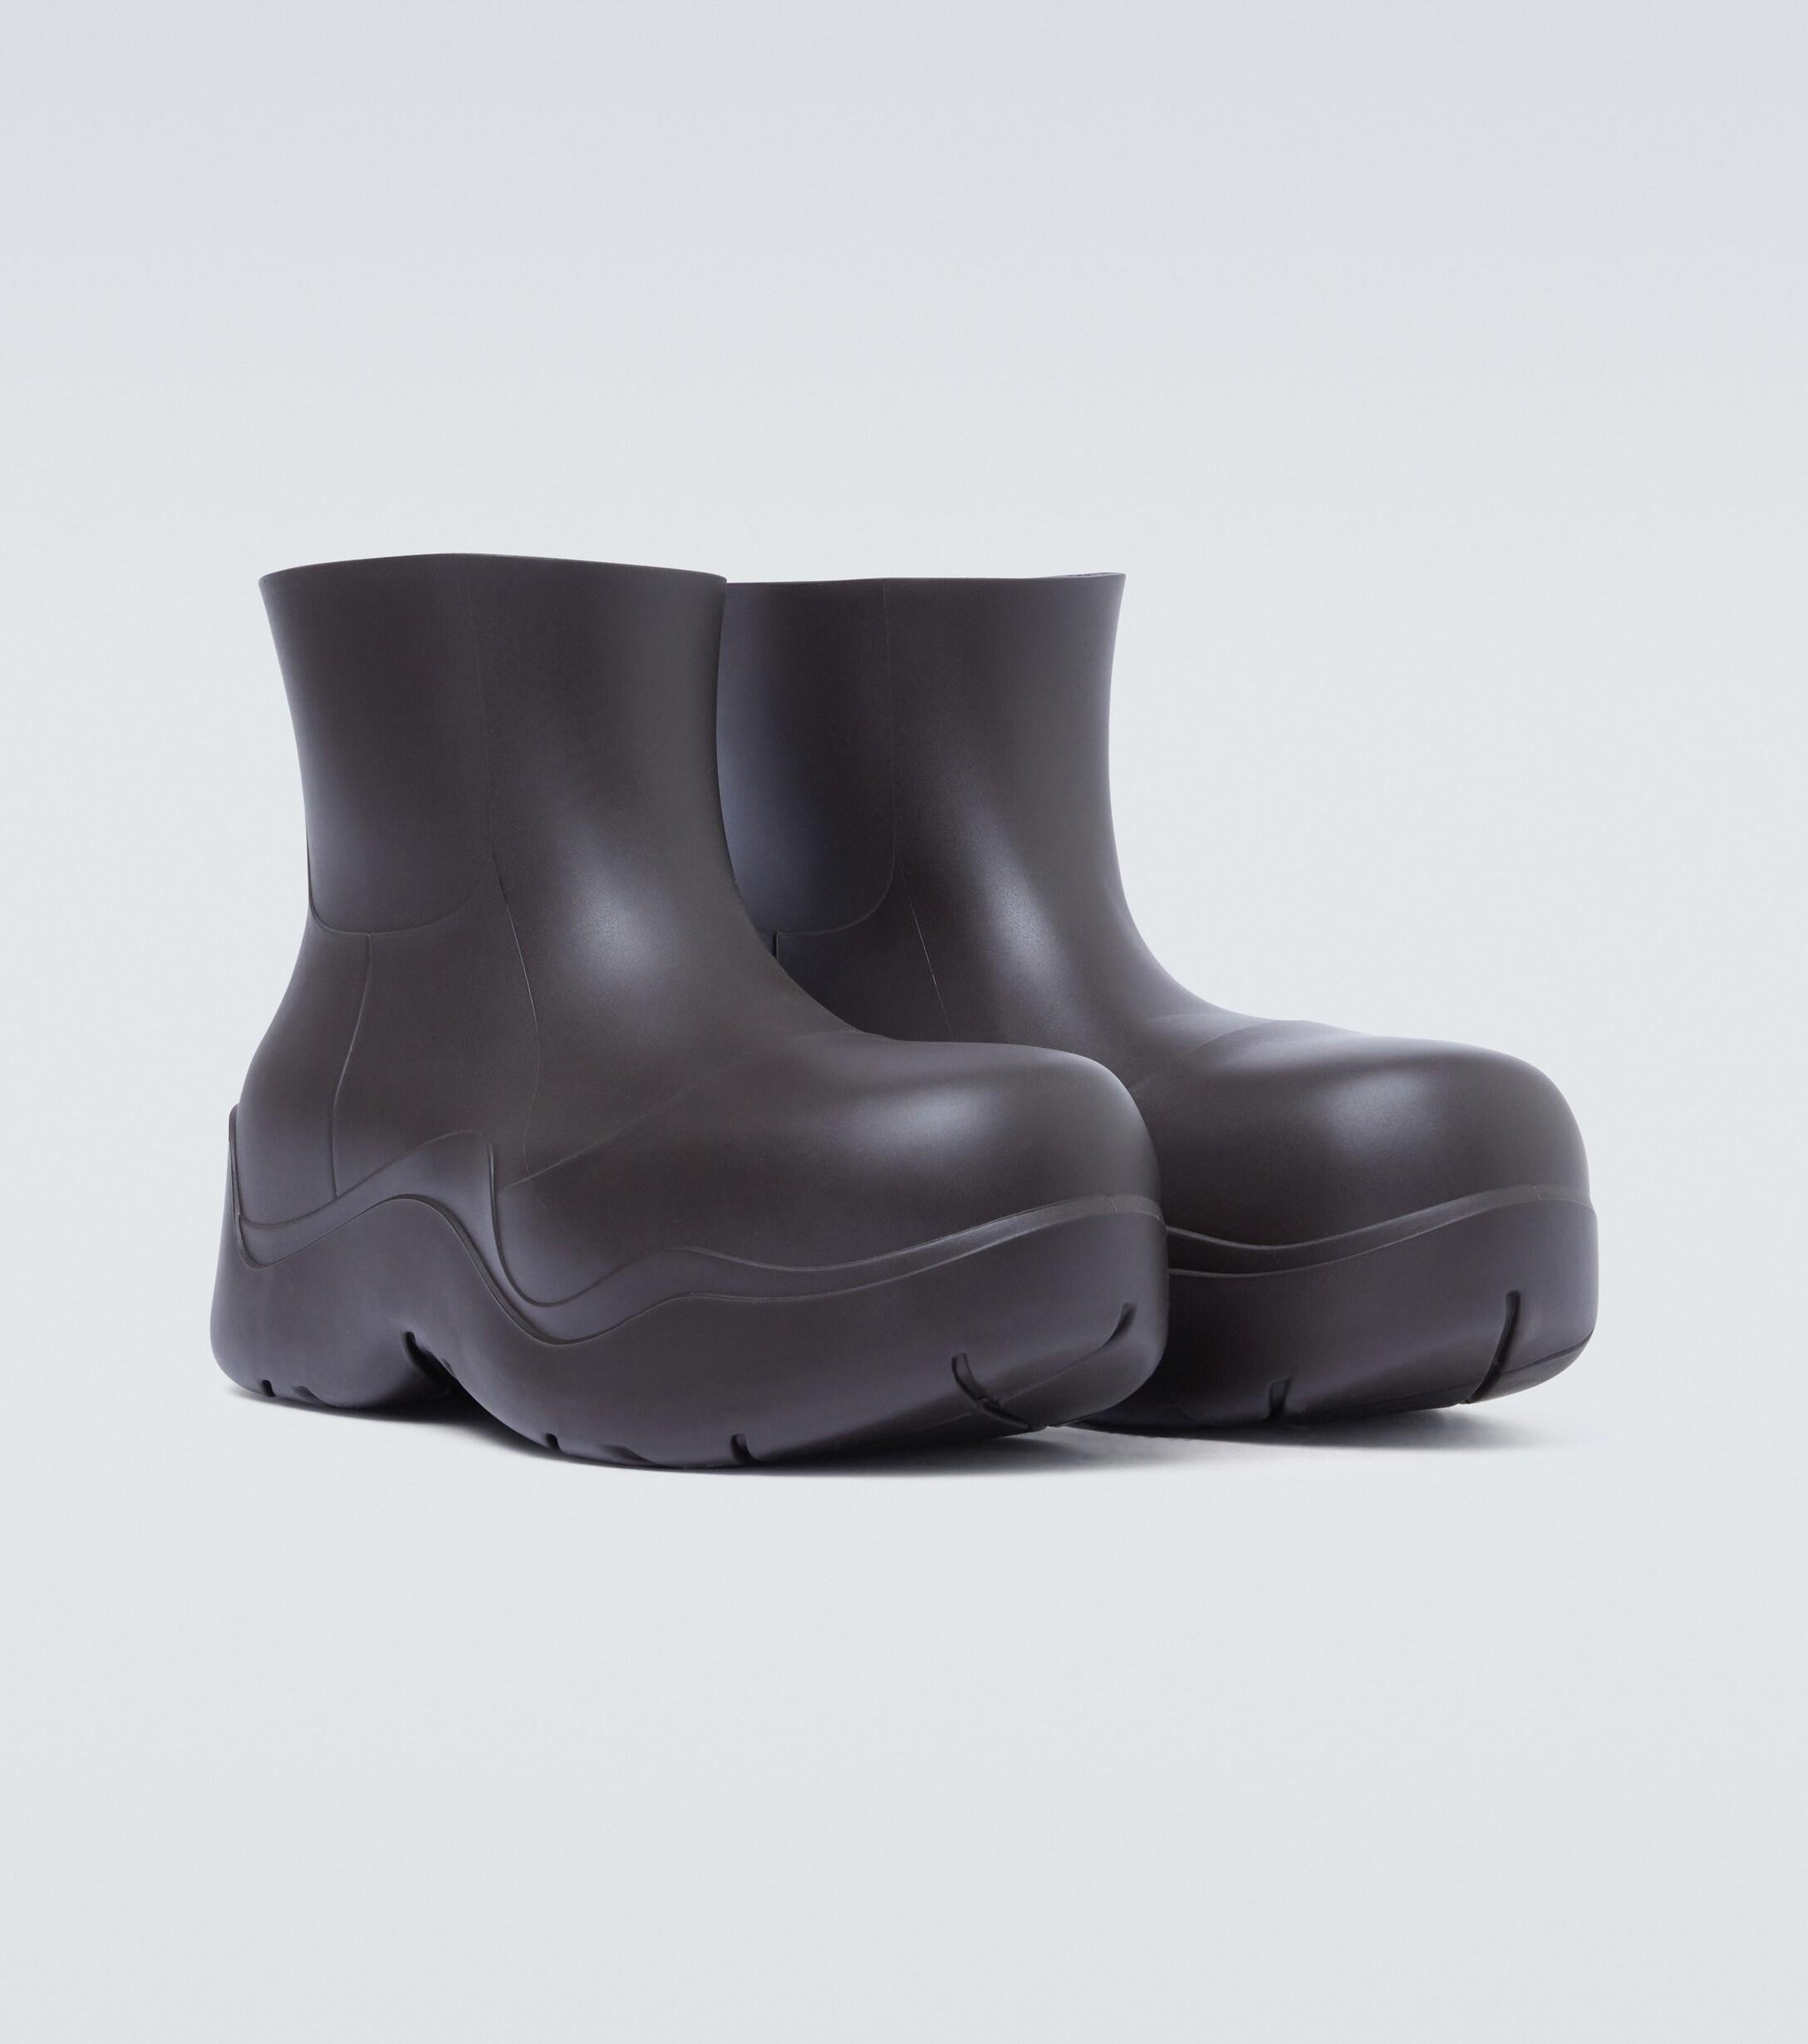 Bottega Veneta Rubber Bv Puddle Boots for Men - Lyst